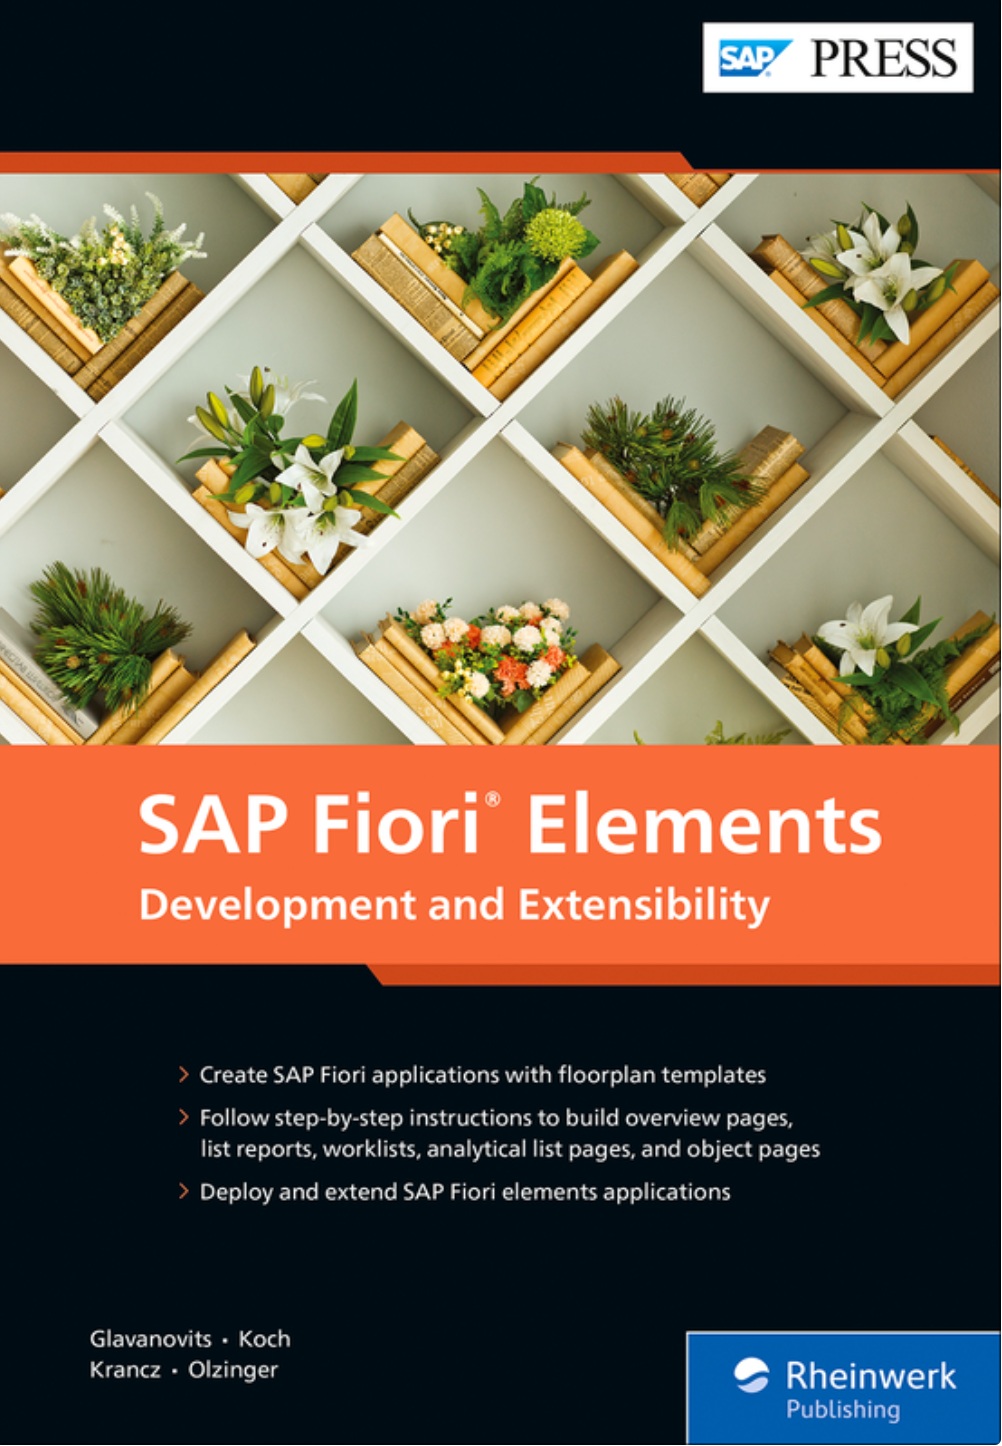  SAP Fiori Elements